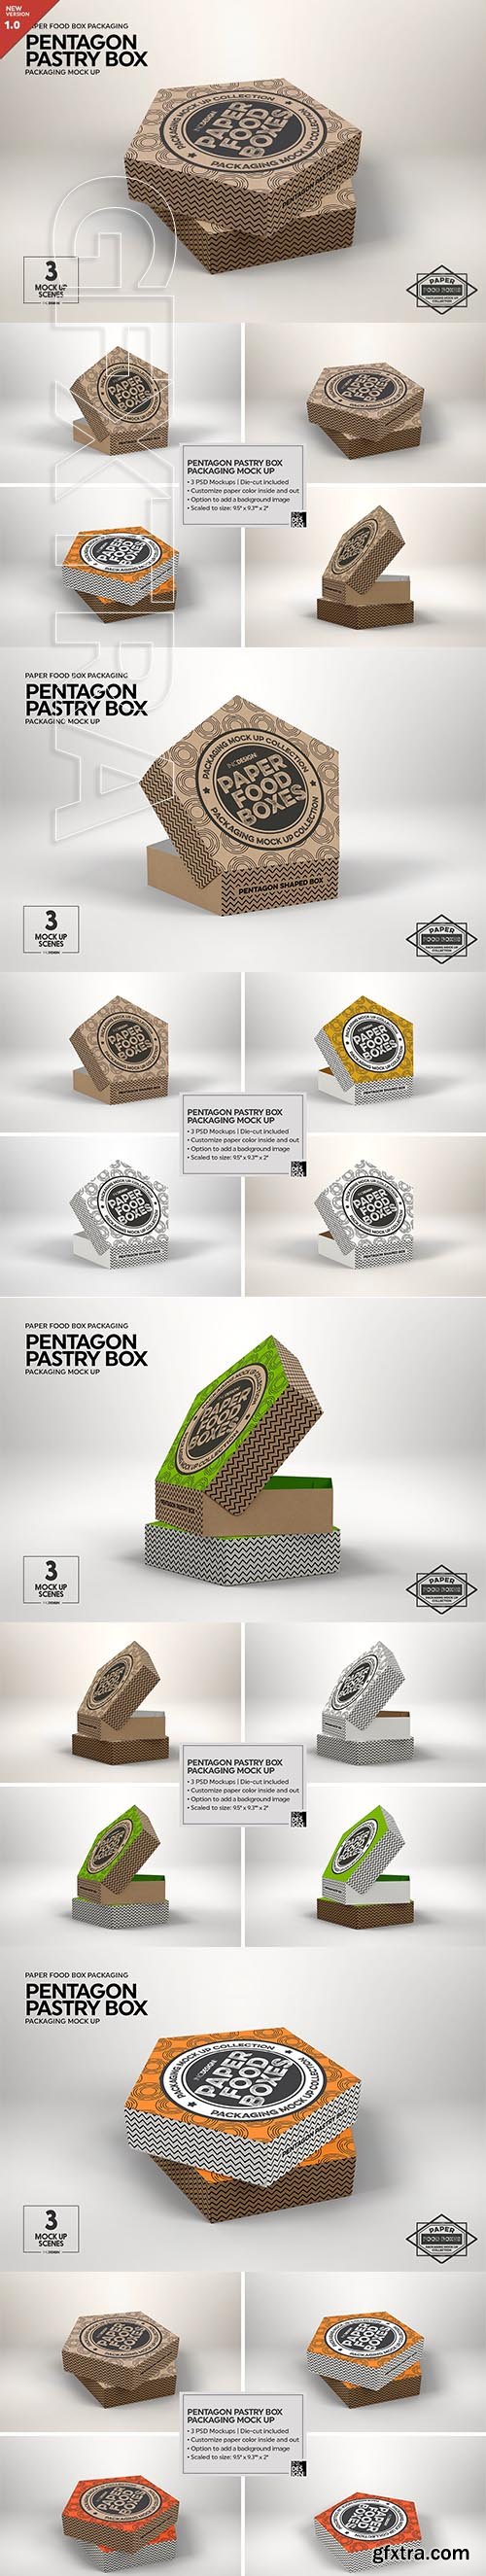 CreativeMarket - Pentagon Pastry Box Mockup 2903007